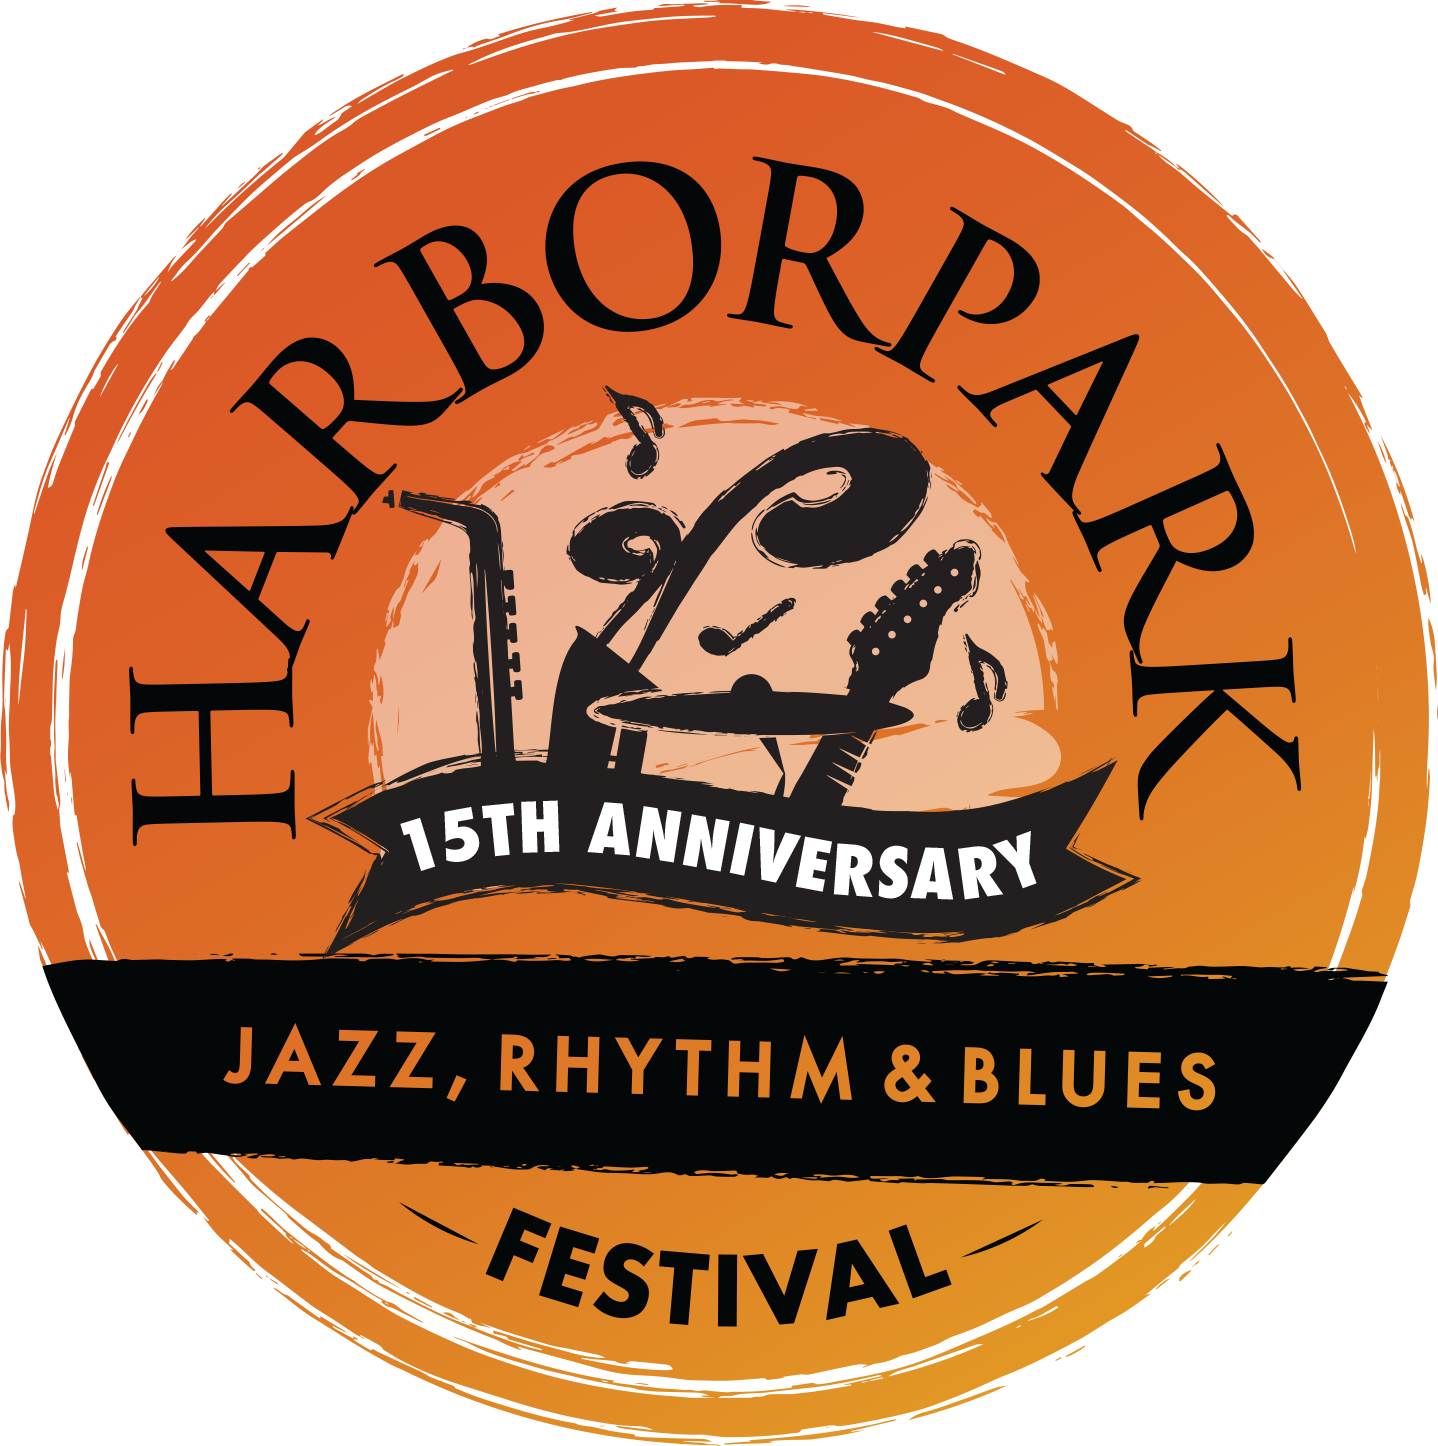 Harborpark Jazz, Rhythm & Blues Festival